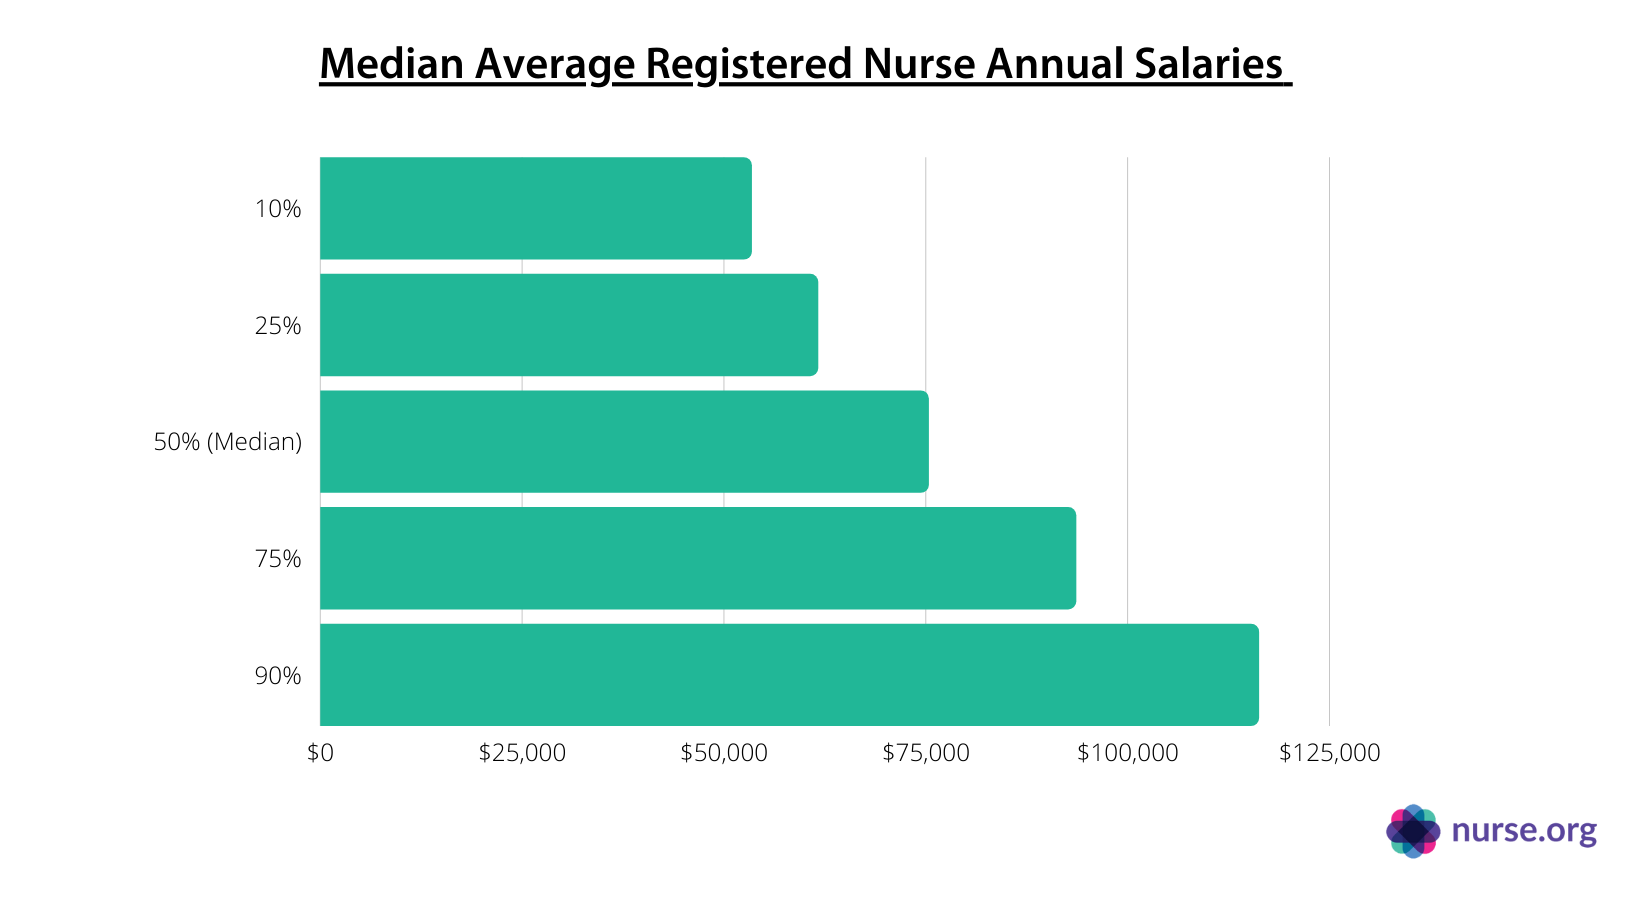 Average registered nurse salary by percentile